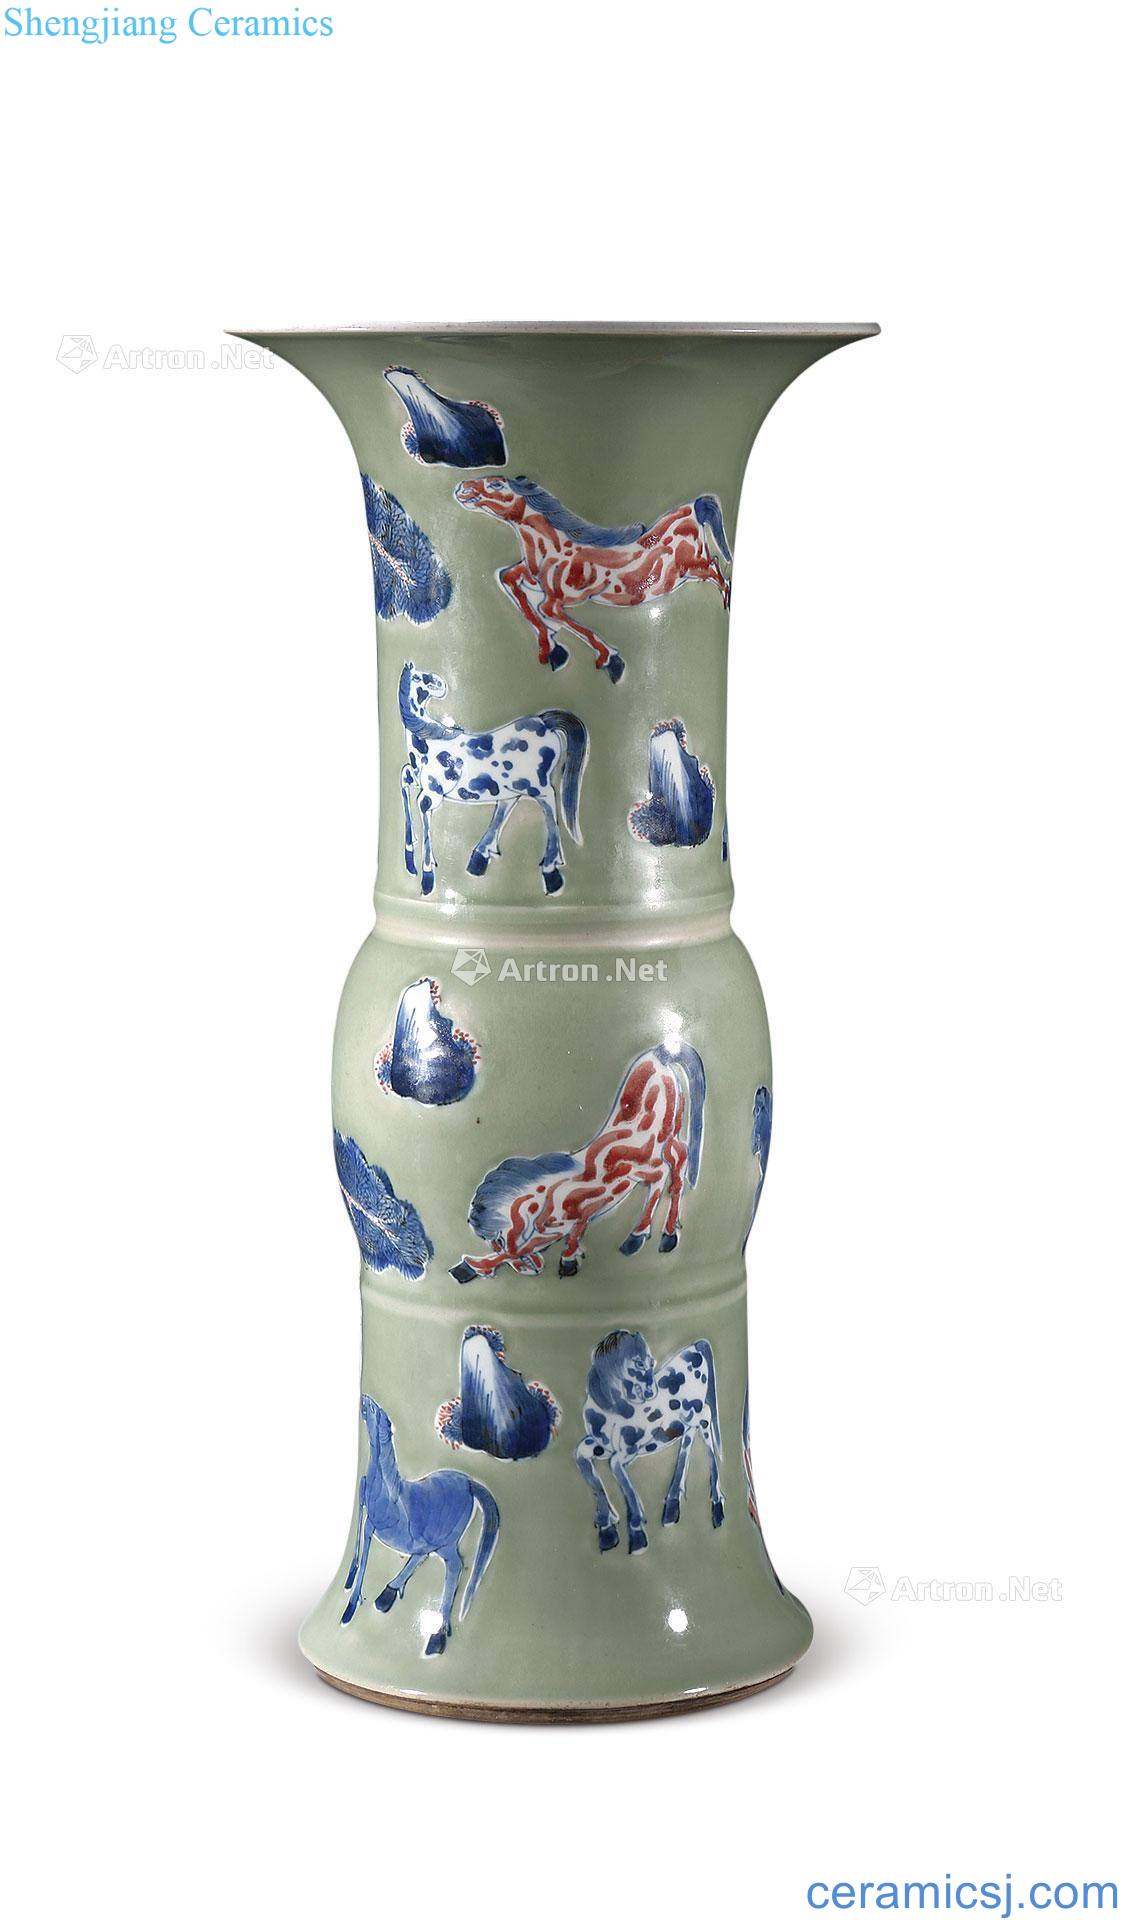 Eight jun qing pea green glaze porcelain youligong figure vase with flowers